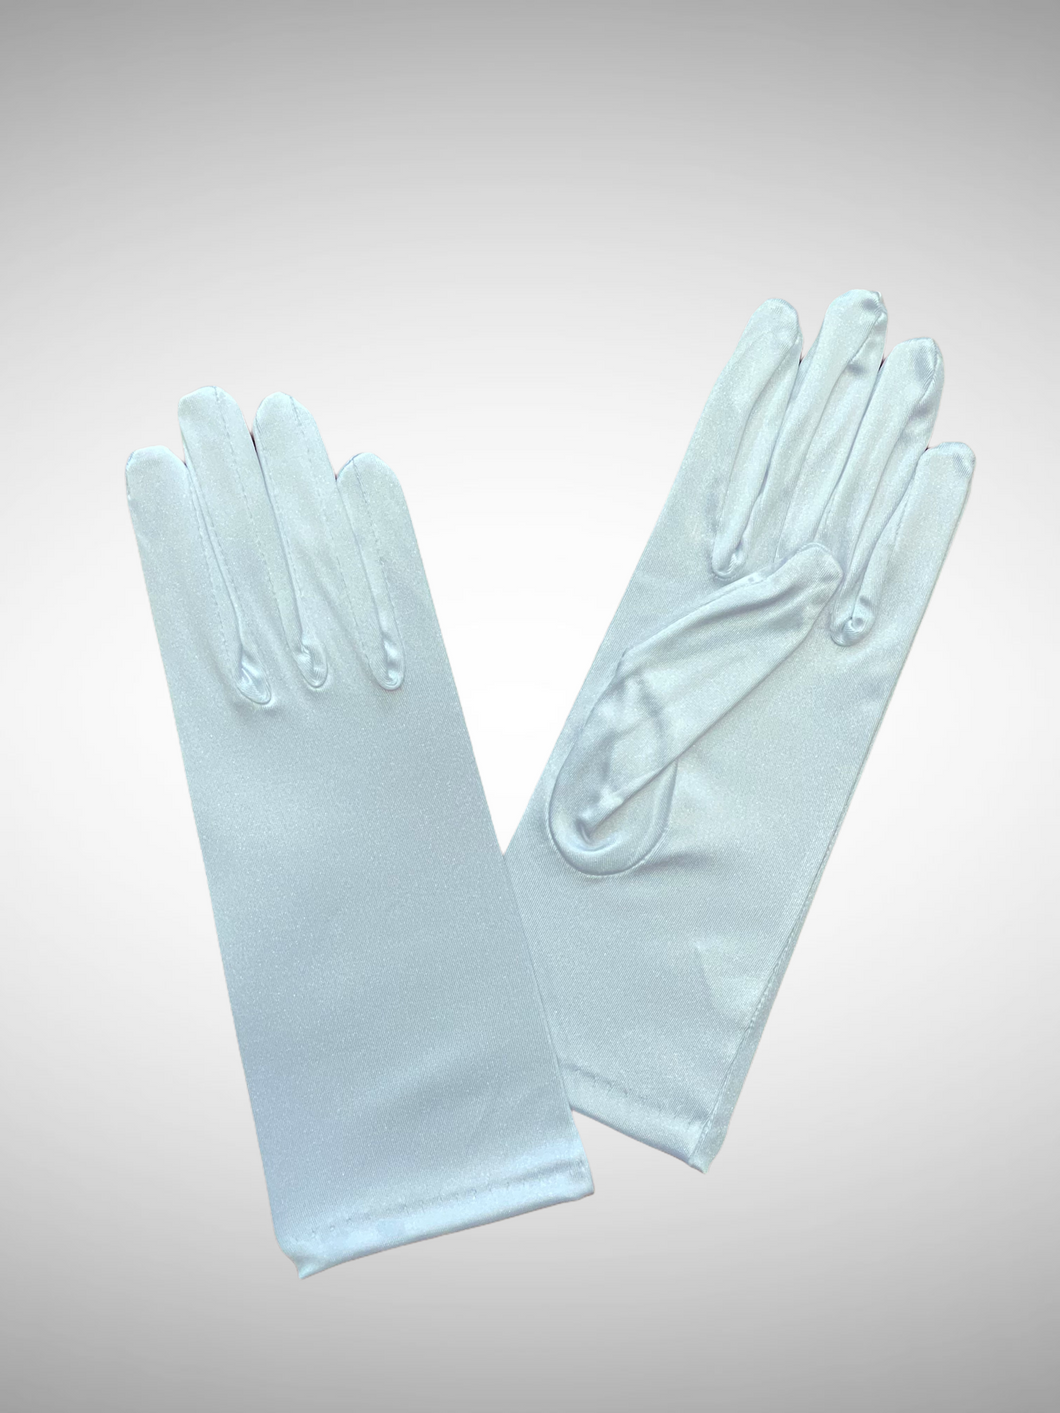 Cocktail gloves